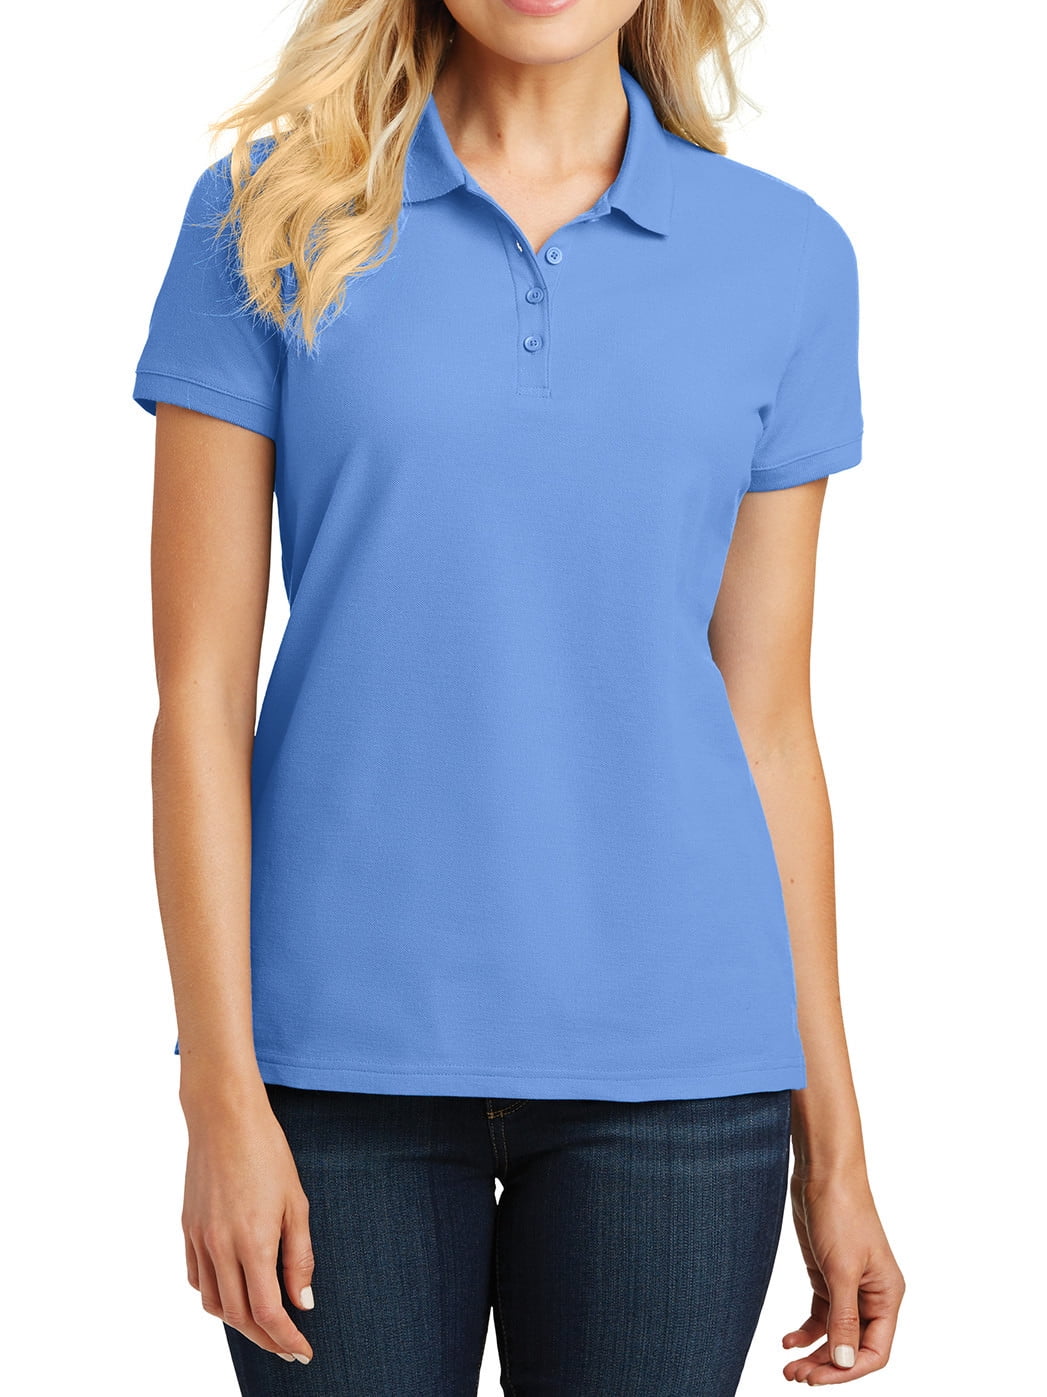 Mafoose Mafoose Women S Core Classic Pique Polo T Shirt Carolina Blue